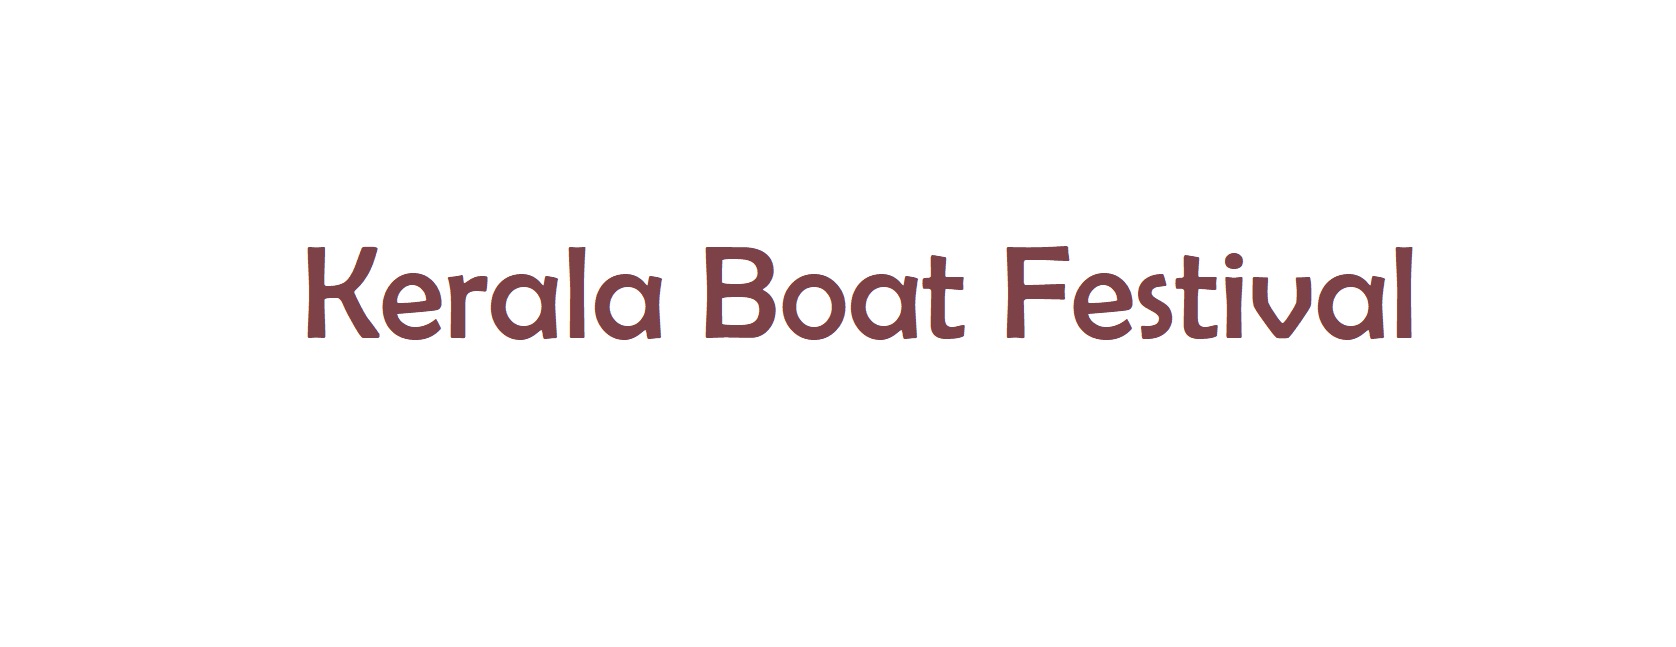 Snake Boat Race Festival Tour, Kerala